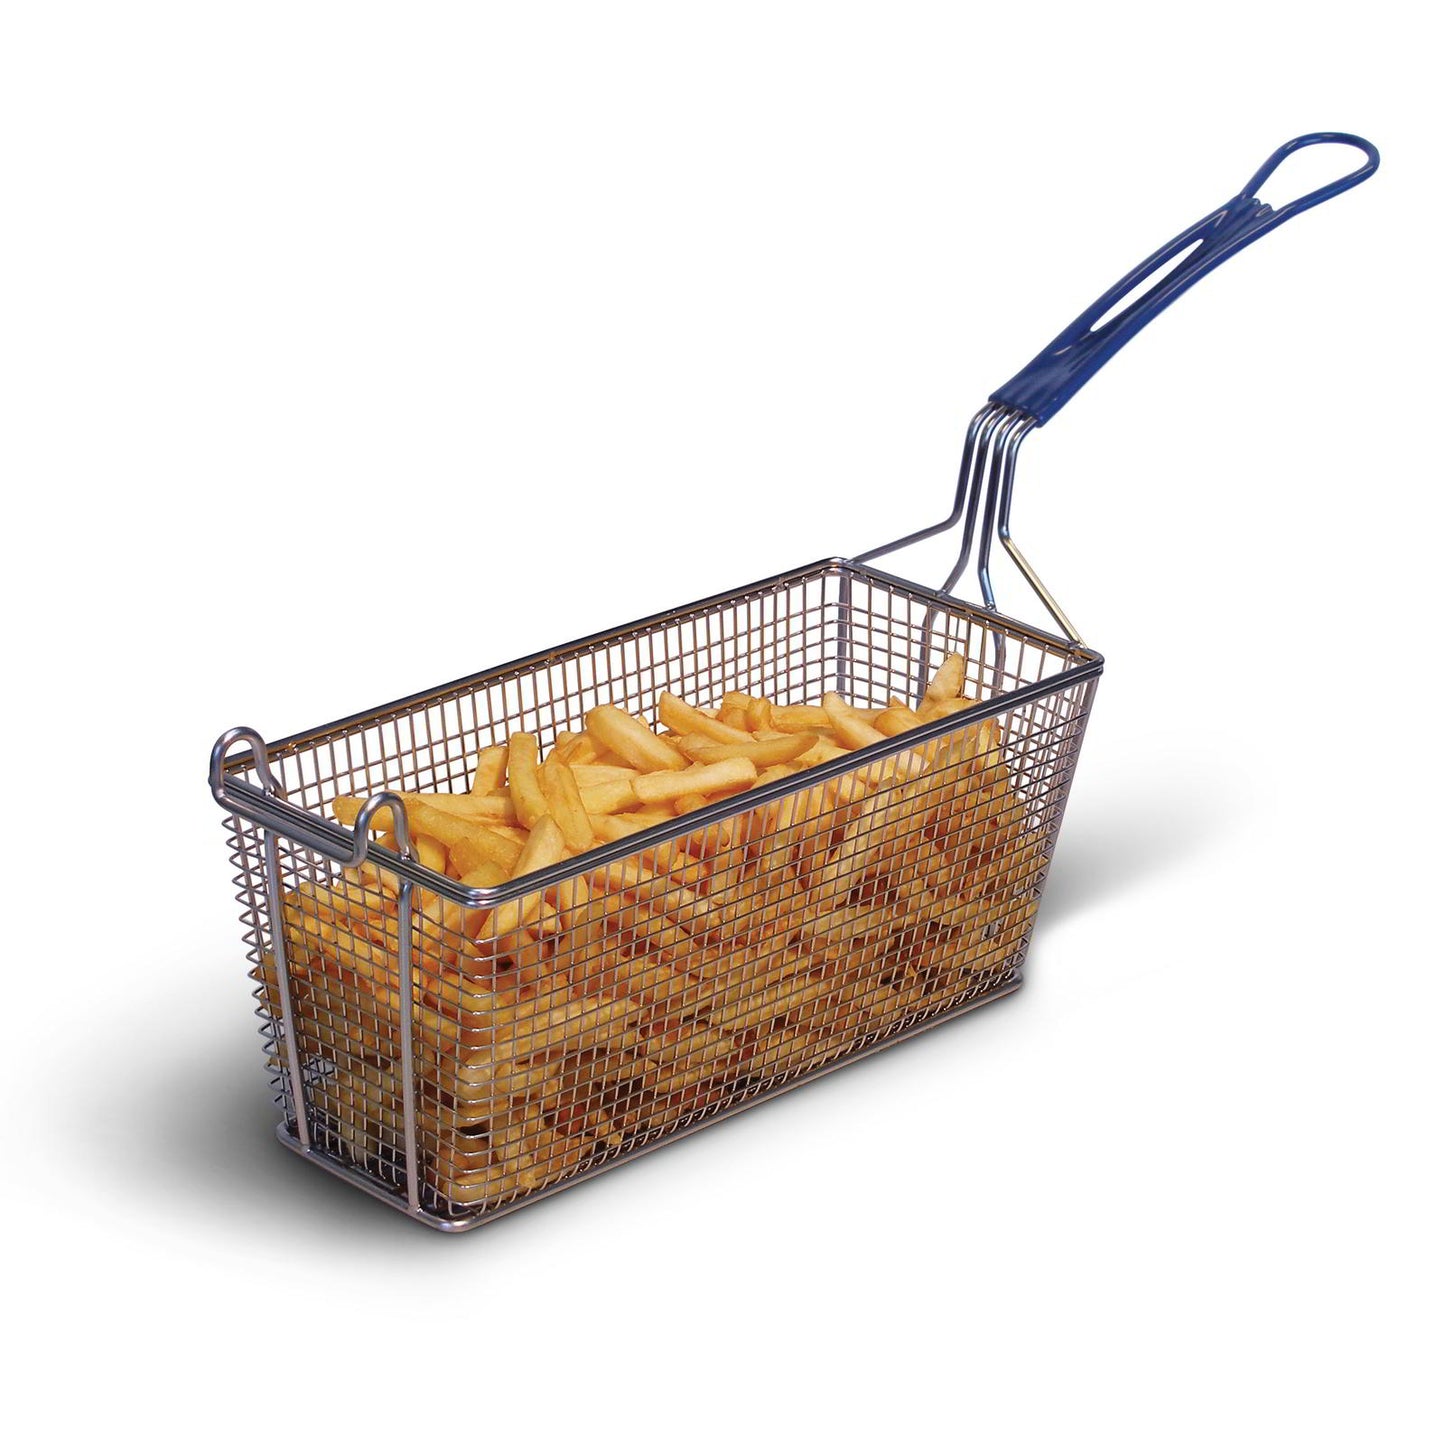 Austheat Freestanding Electric Fryer, 3 baskets